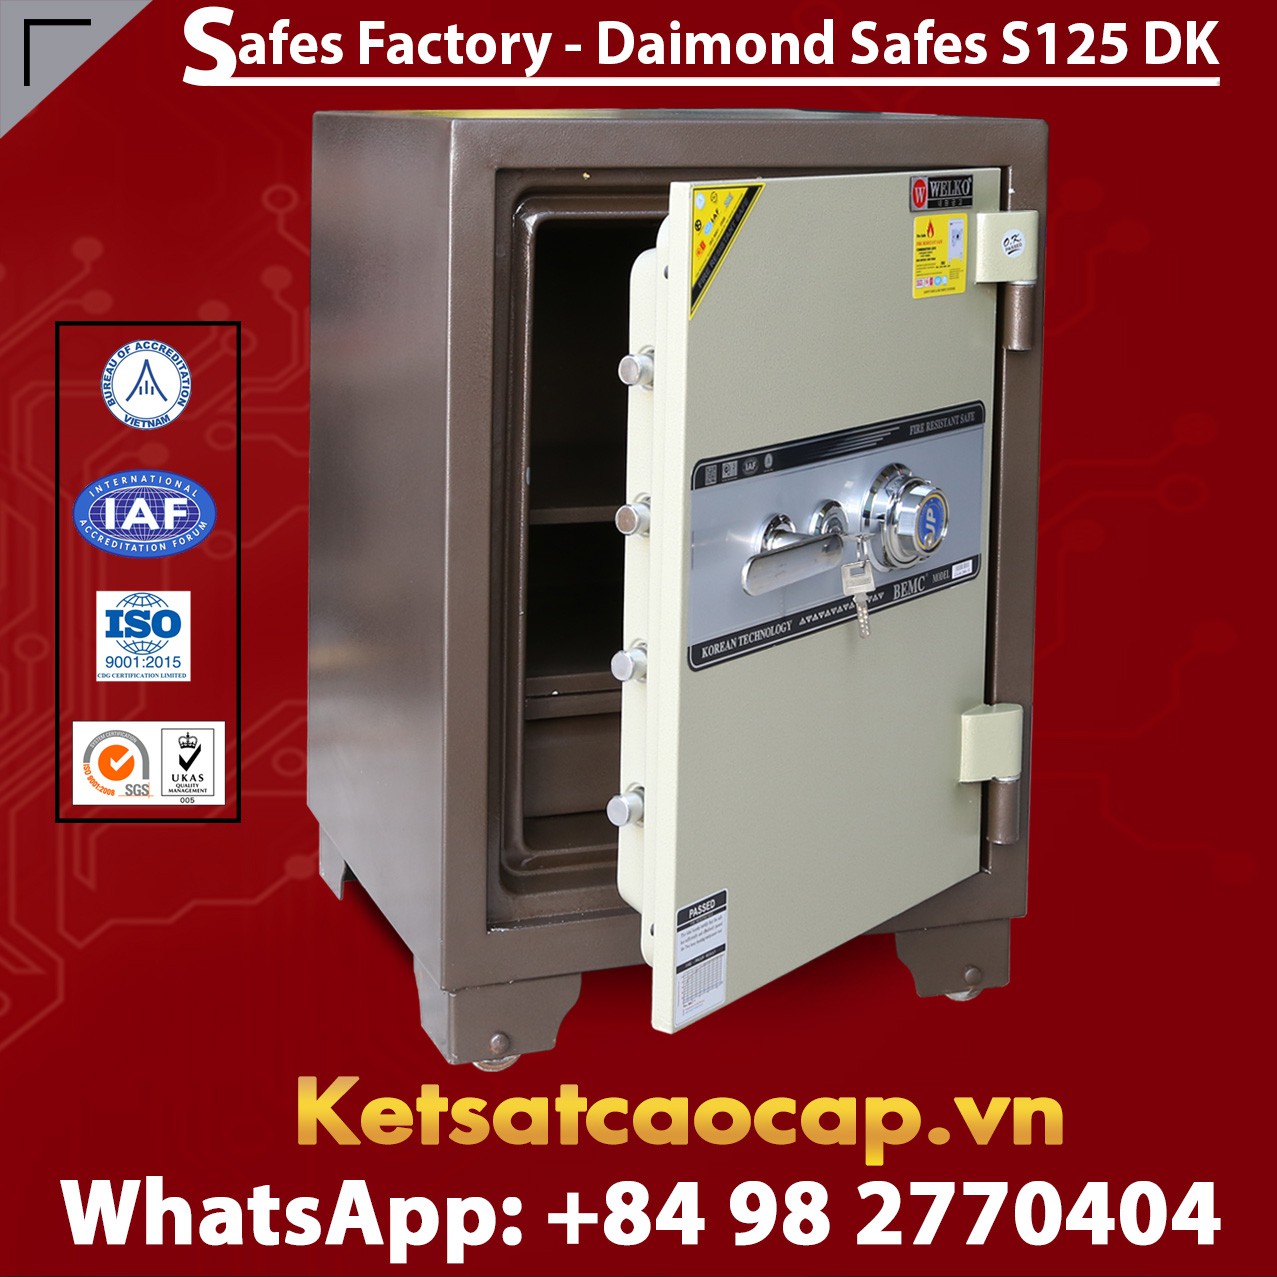 Depository Safes Manufacturers - mua két sắt xuất khẩu ở đâu uy tín